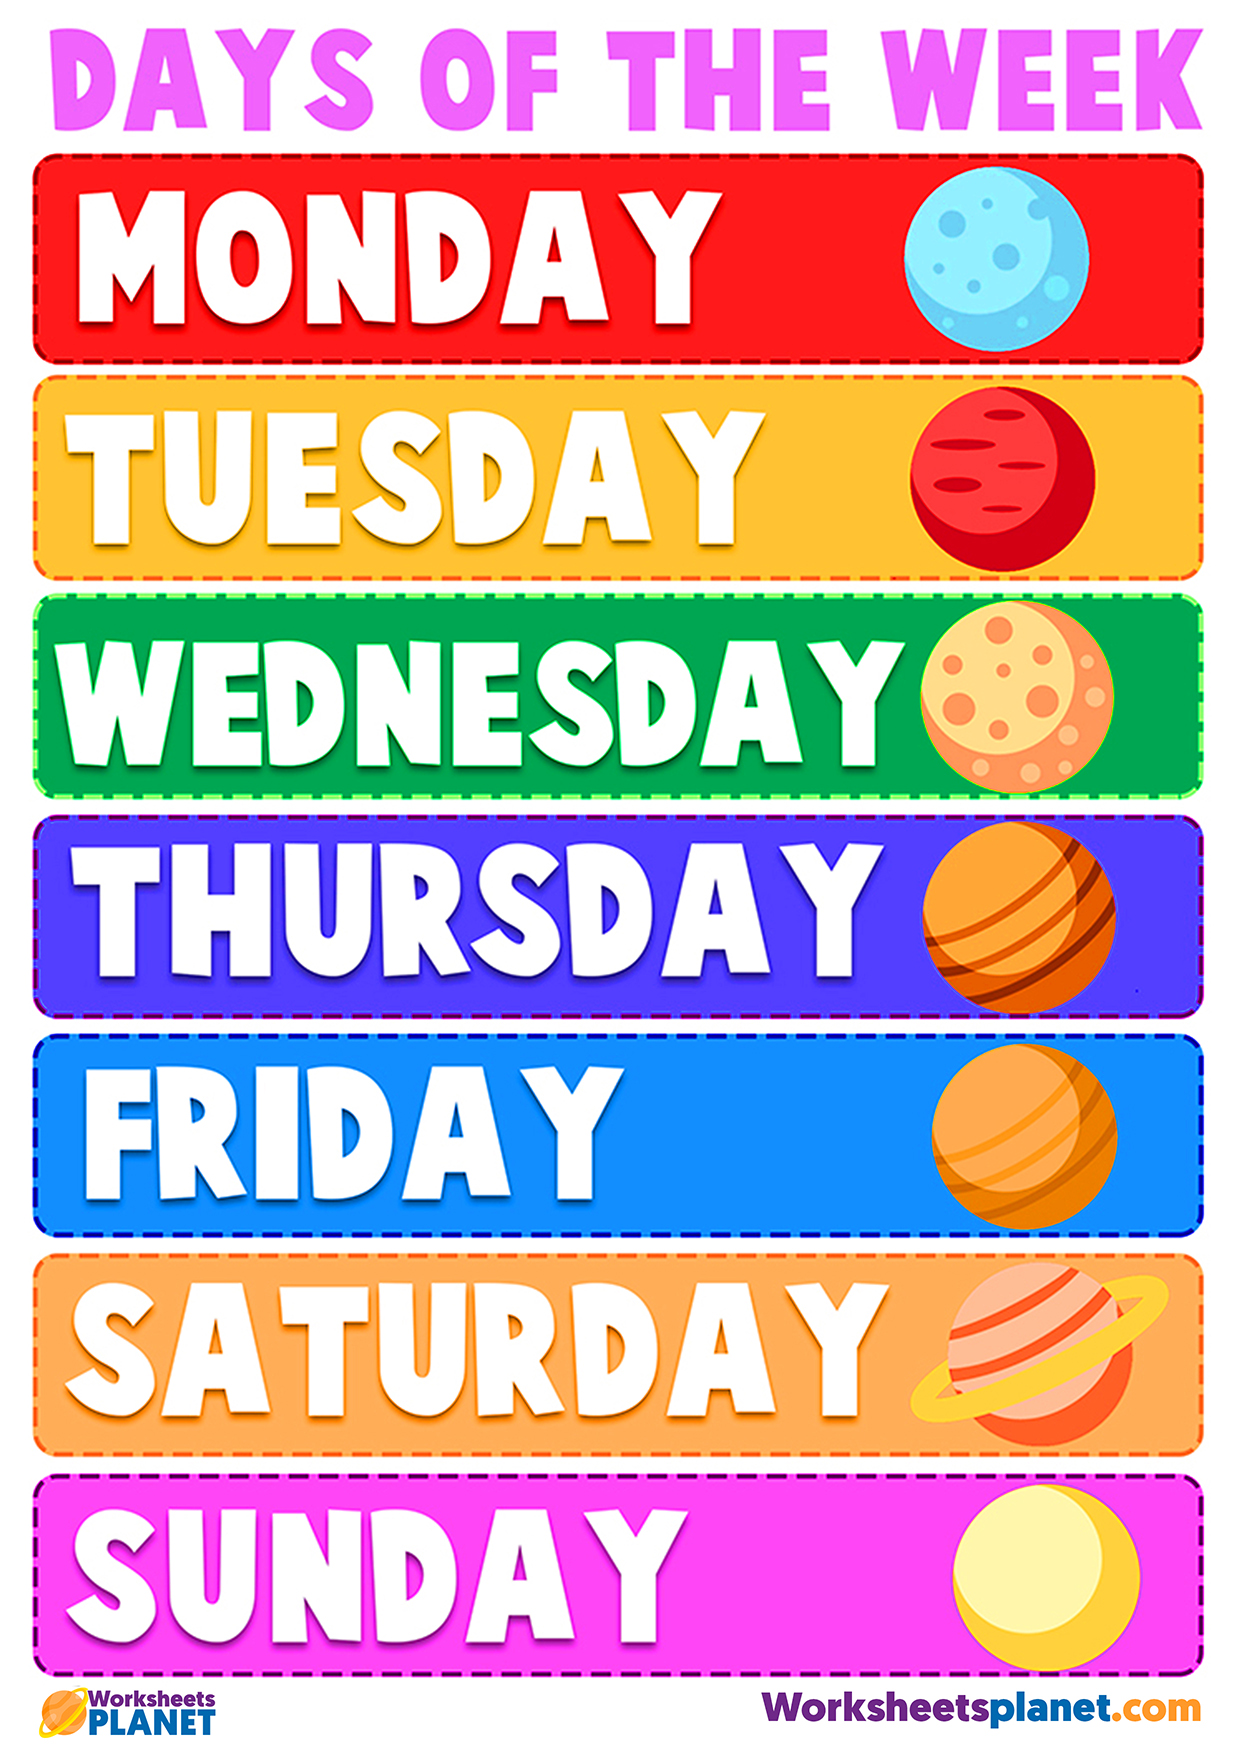 Четверг пятница суббота воскресенье на английском. Days of the week. Days of the week плакат. Week Days name. Days of the week Tuesday.